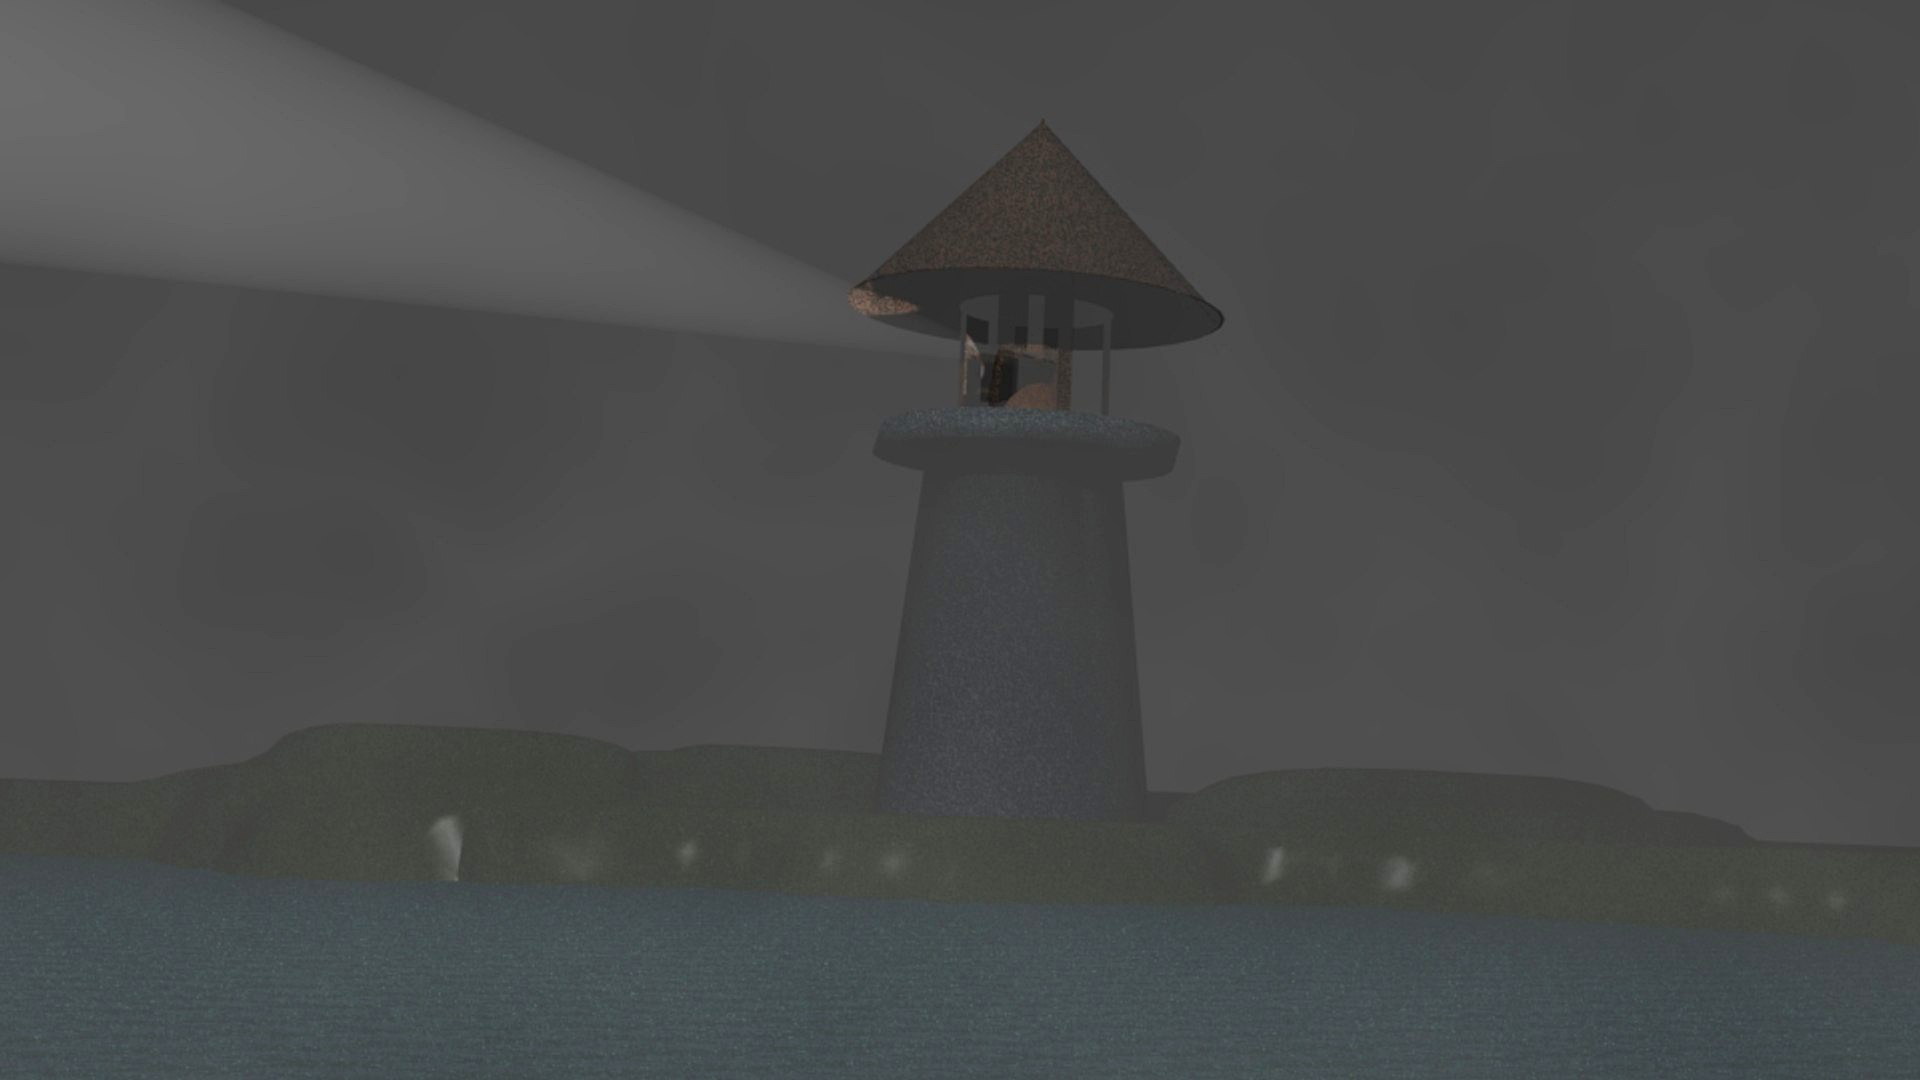 Broken Light house in a foggy night